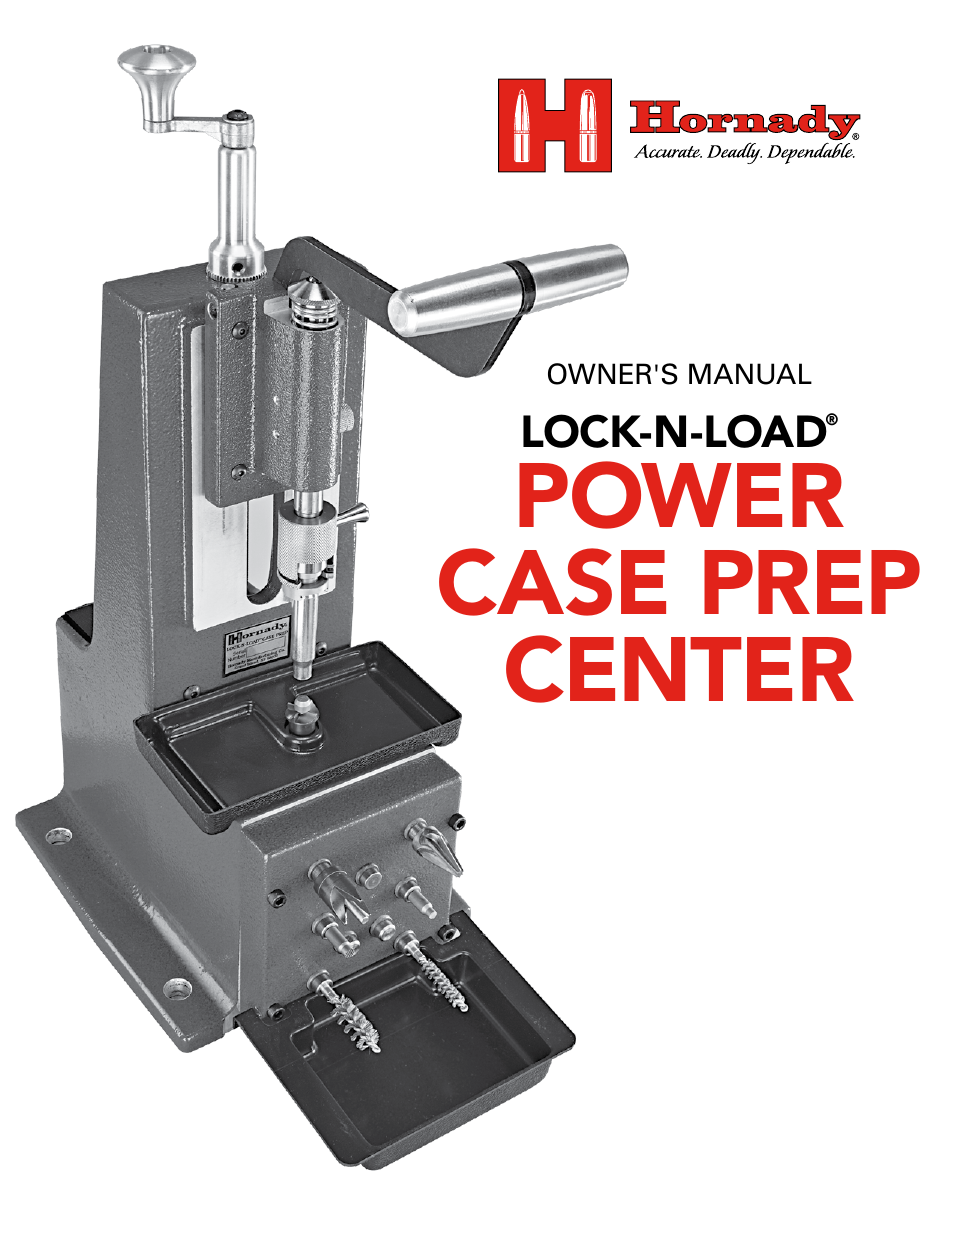 Lock-N-Load Power Case Prep Center